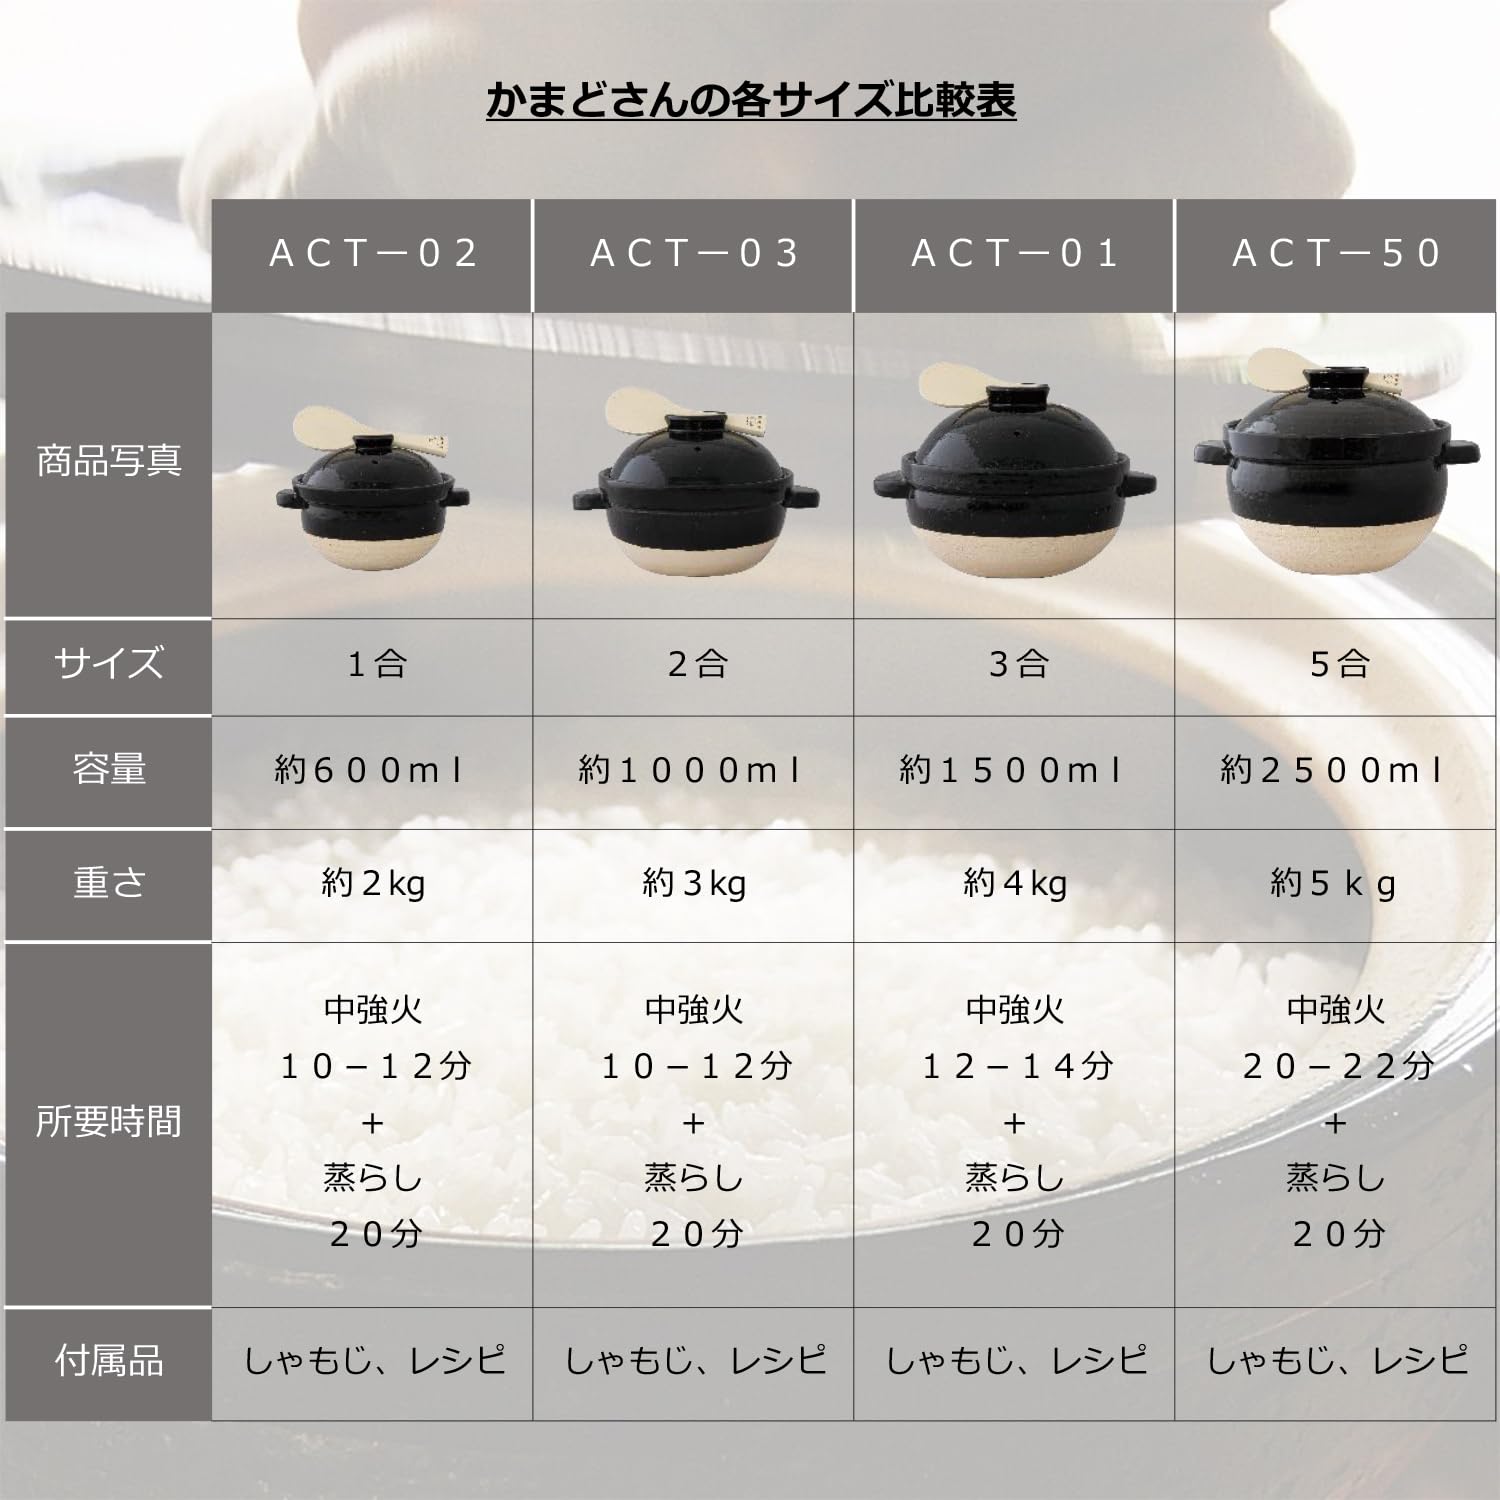 Hasegatani Pottery ACT-03 Hasegaen Kamado-san Rice Earthenware Pot, 2 Cups, Approx. 33.8 fl oz (1,000 ml), Direct Fire, Black